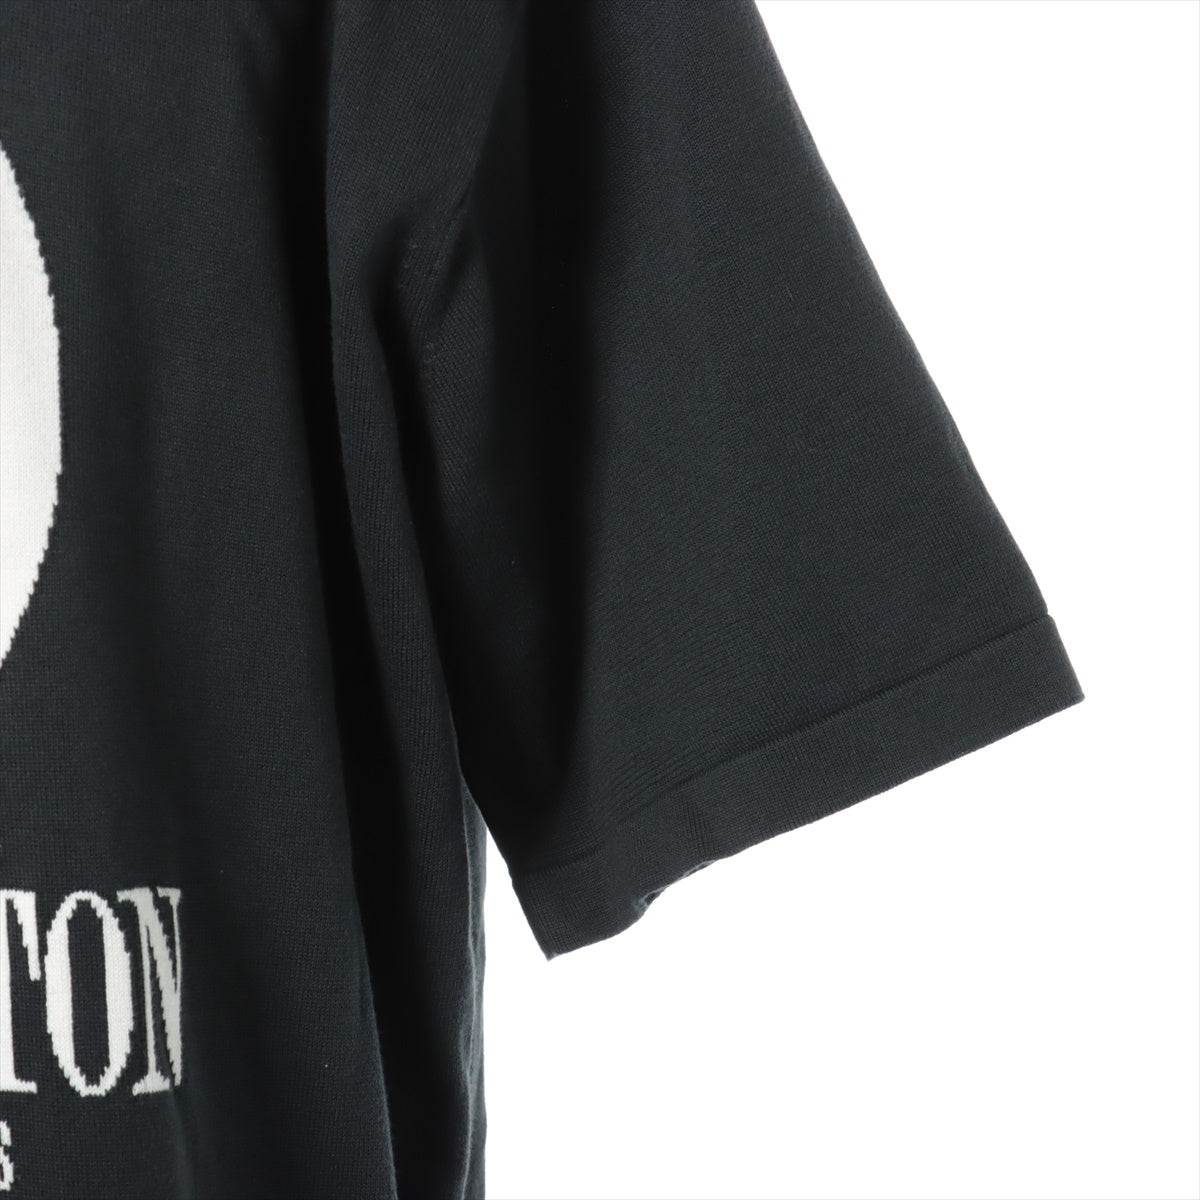 Louis Vuitton 23AW Cotton Short Sleeve Knitwear 4L Men's Black  RM232 SHORT SLEEVE COTTON INTARSIA CREWNECK